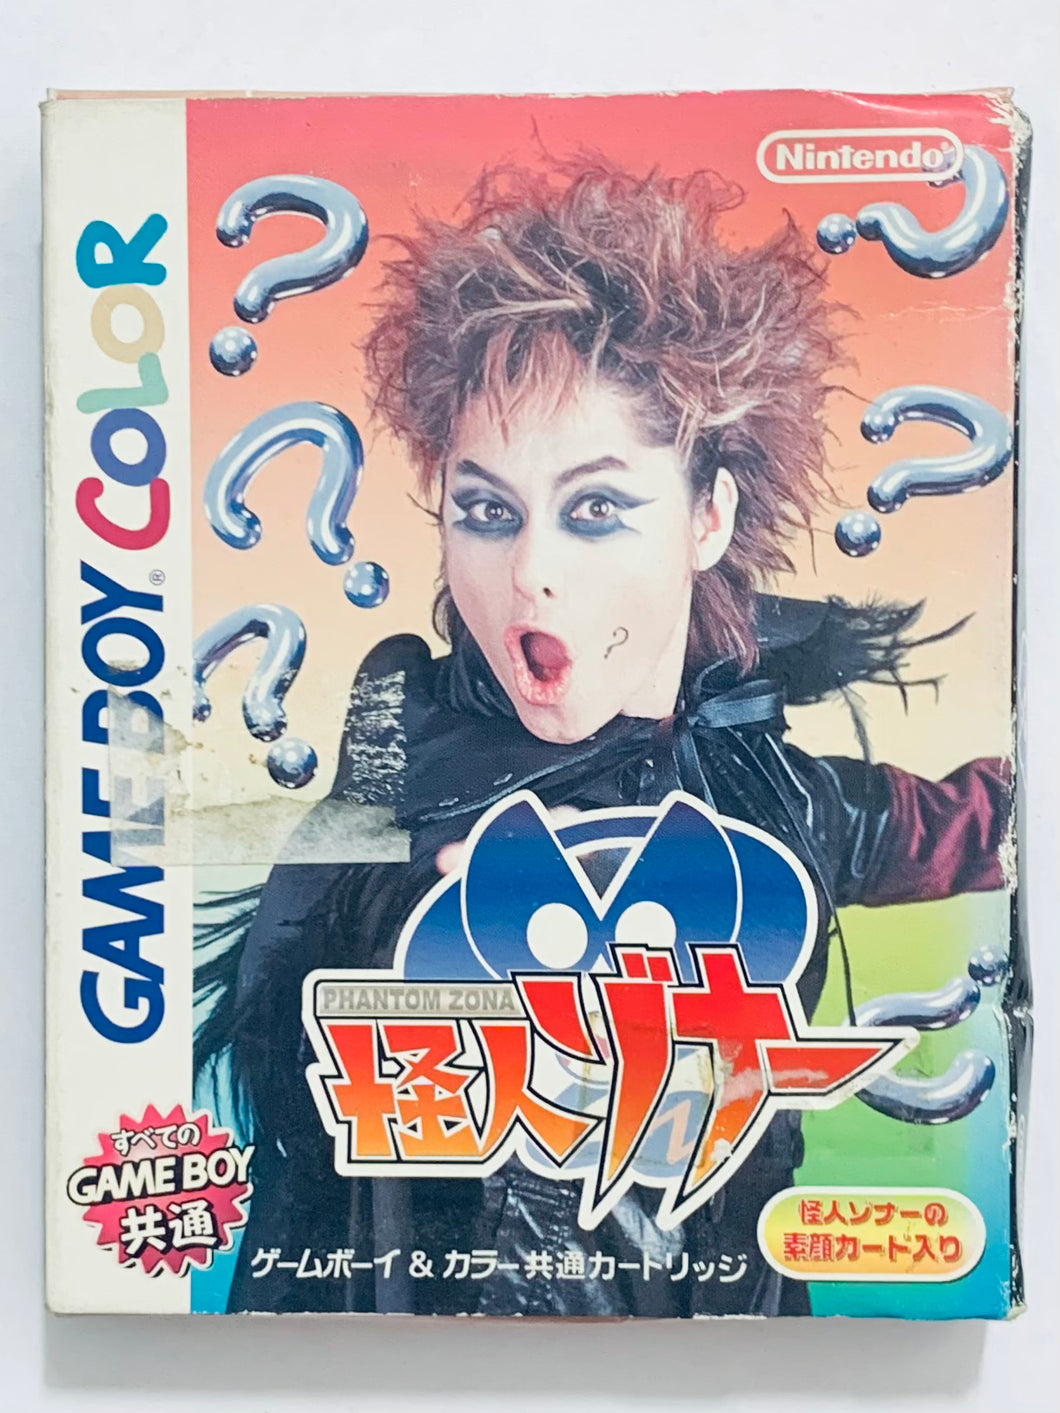 Kaijin Zona - GameBoy Color - Game Boy - Pocket - GBC - JP - CIB (DMG-BKZJ-JPN)